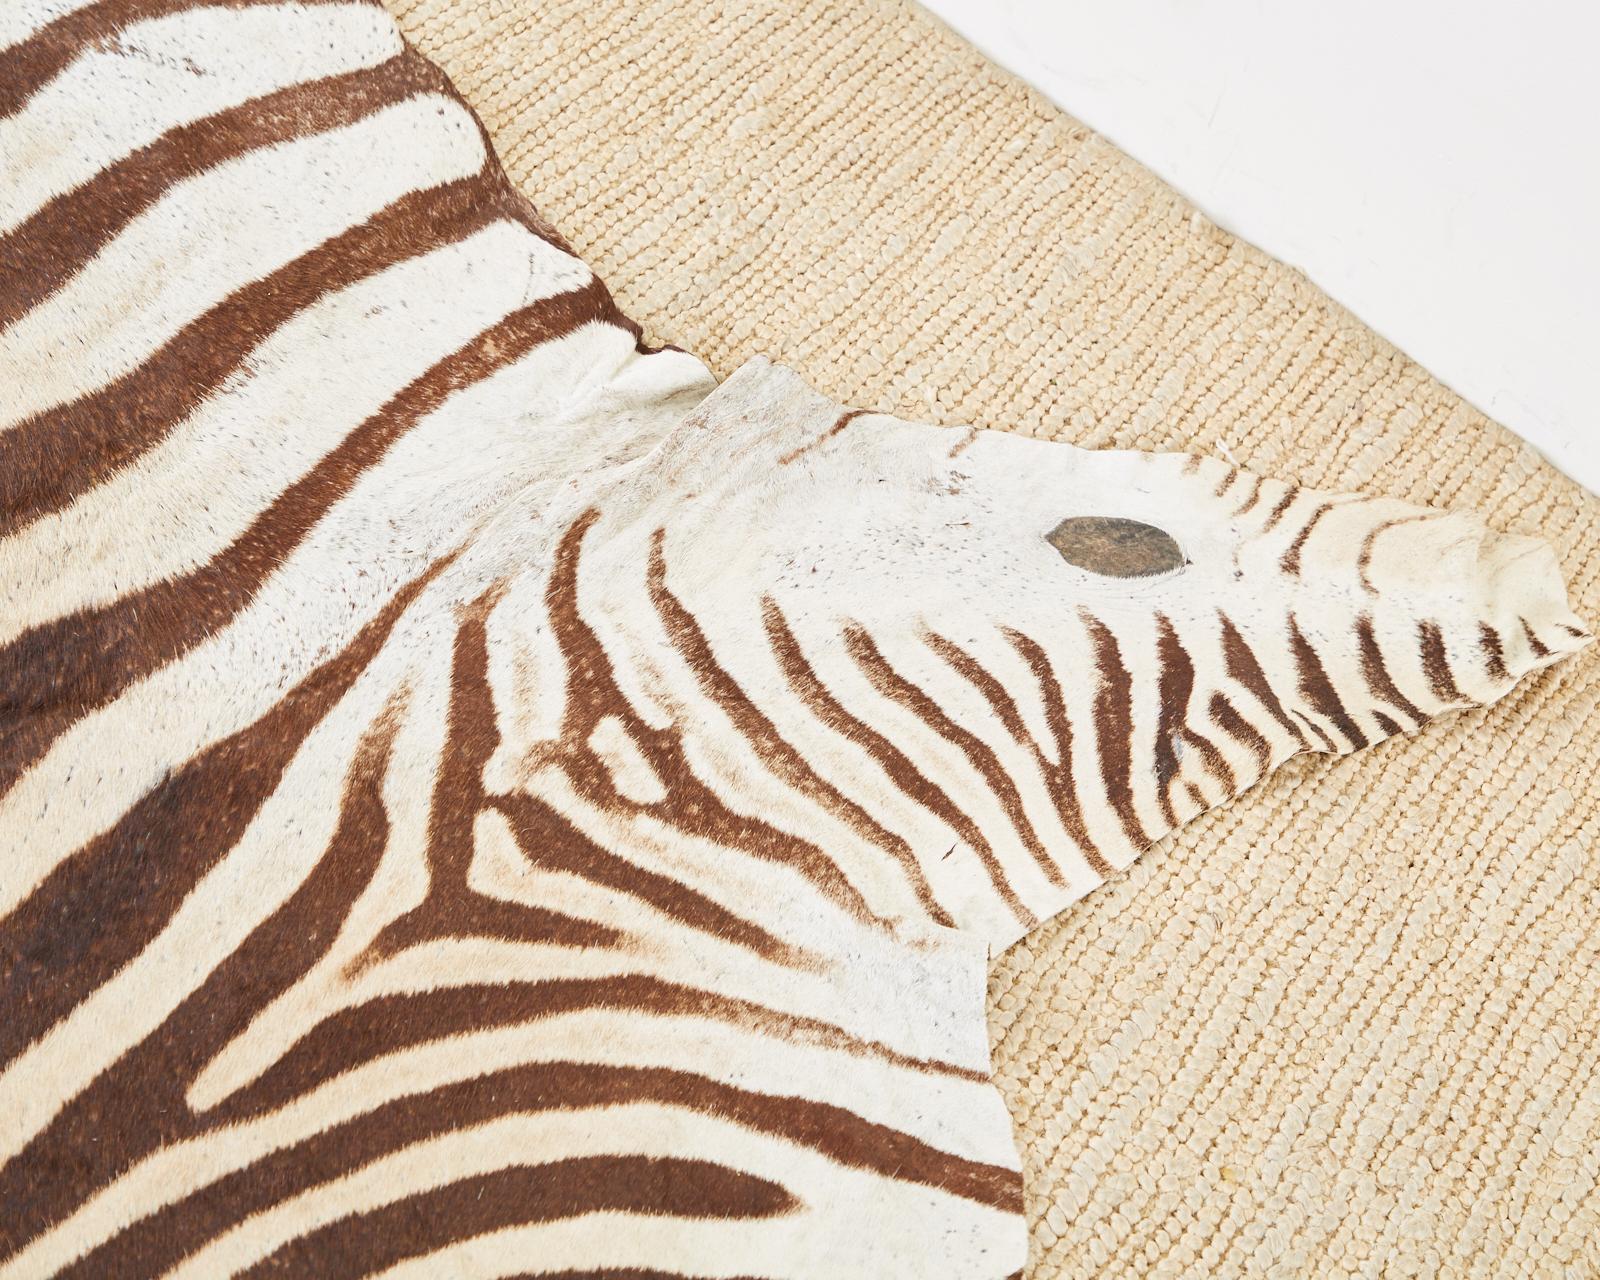 Authentic African Zebra Hide Carpet Rug 2